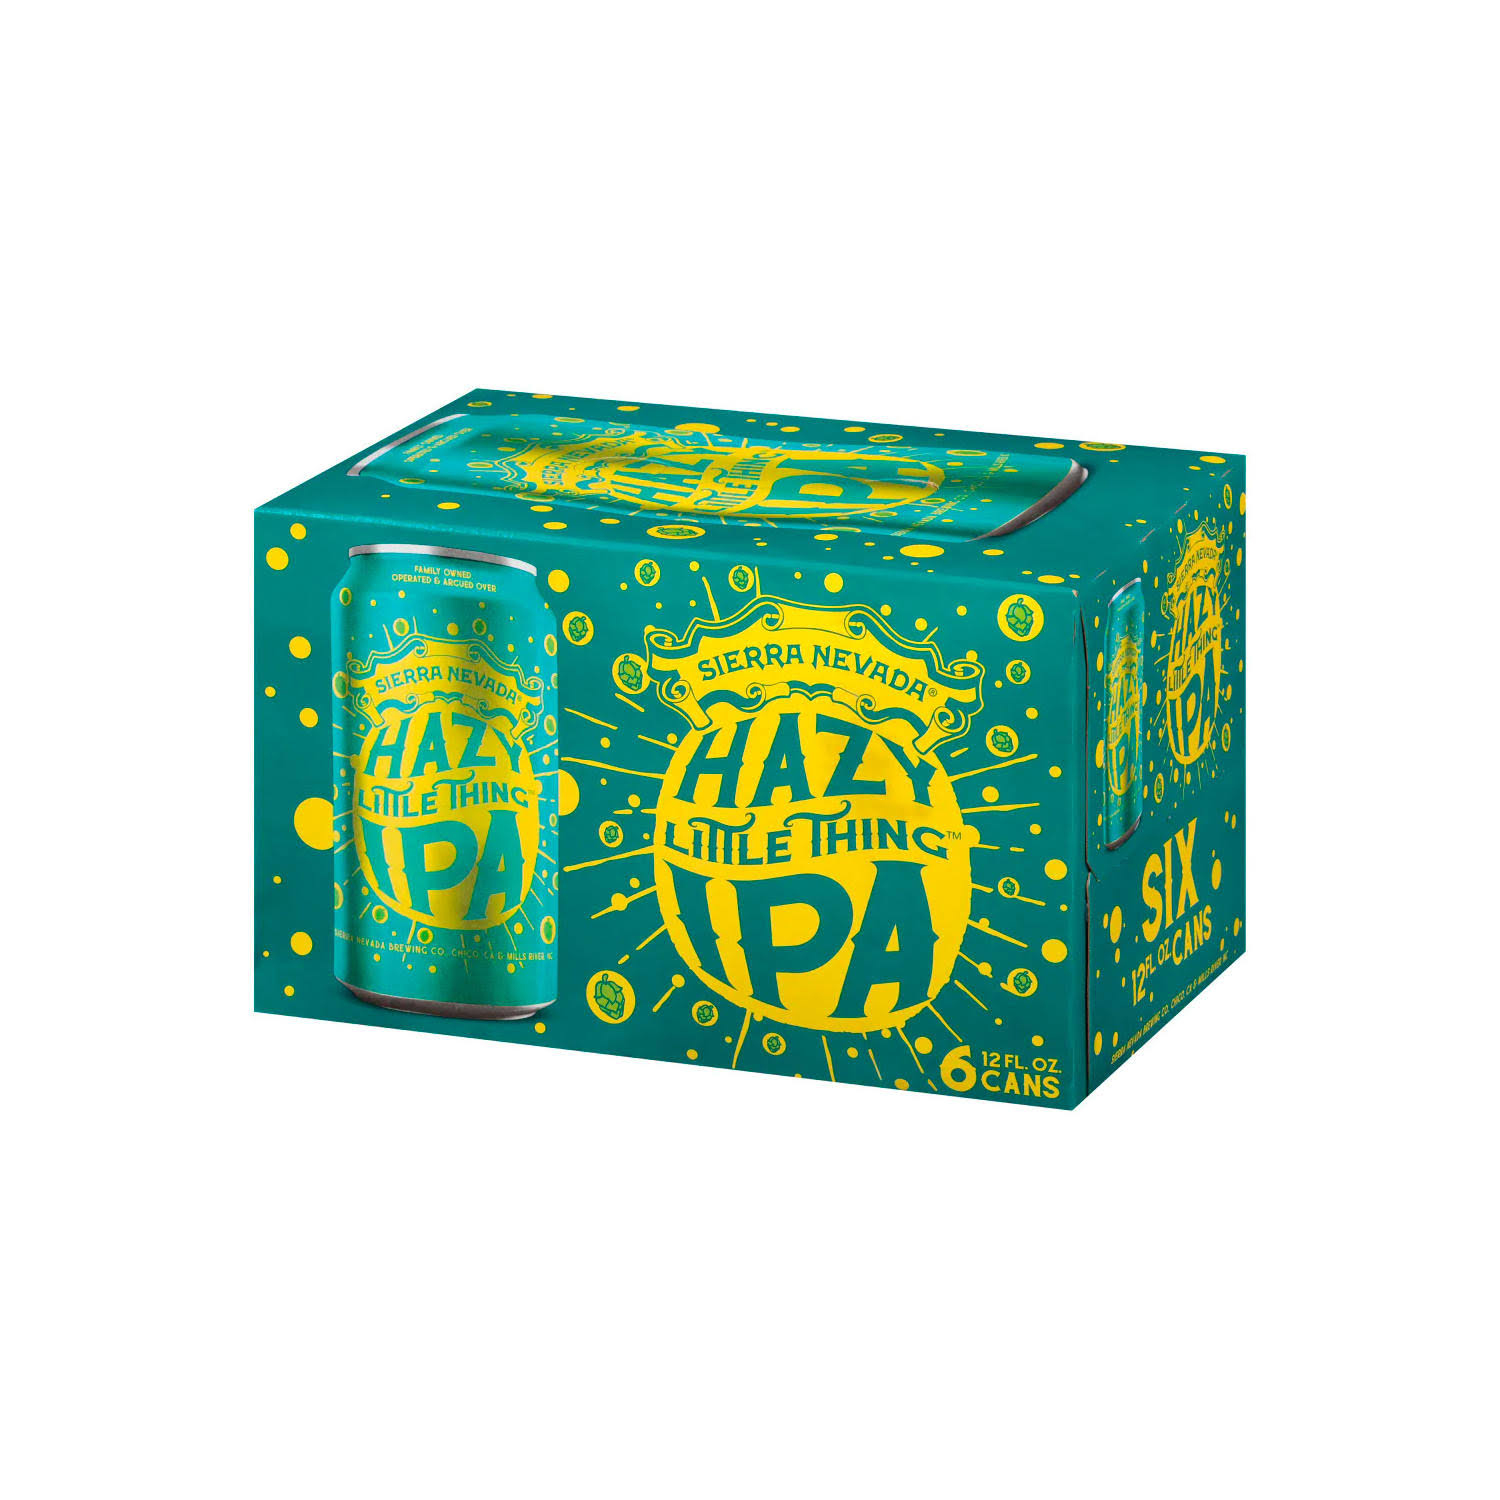 Sierra Nevada Beer, IPA, Hazy Little Thing - 6 pack, 12 fl oz cans